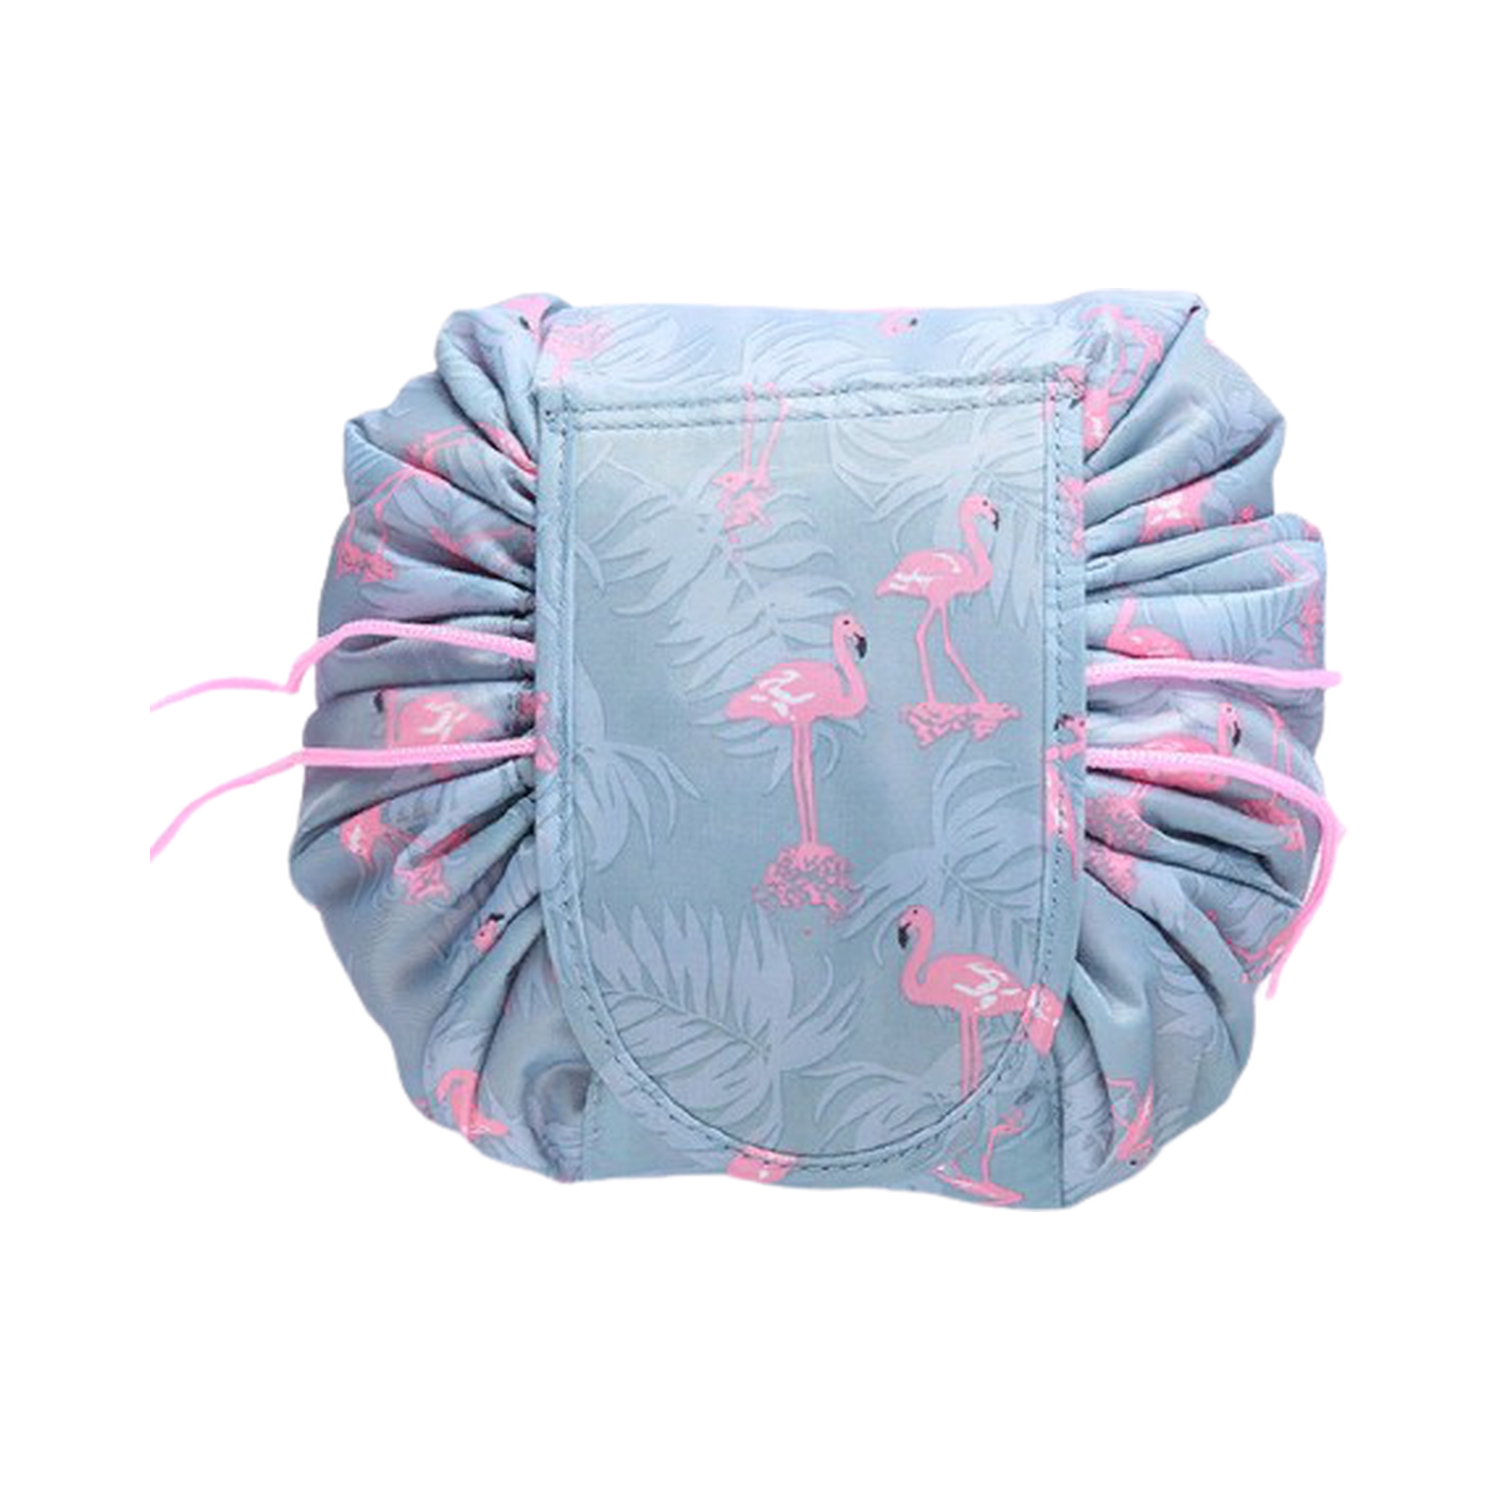 Косметичка-мешок Uniglodis нейлоновая Серый с фламинго - фото 1